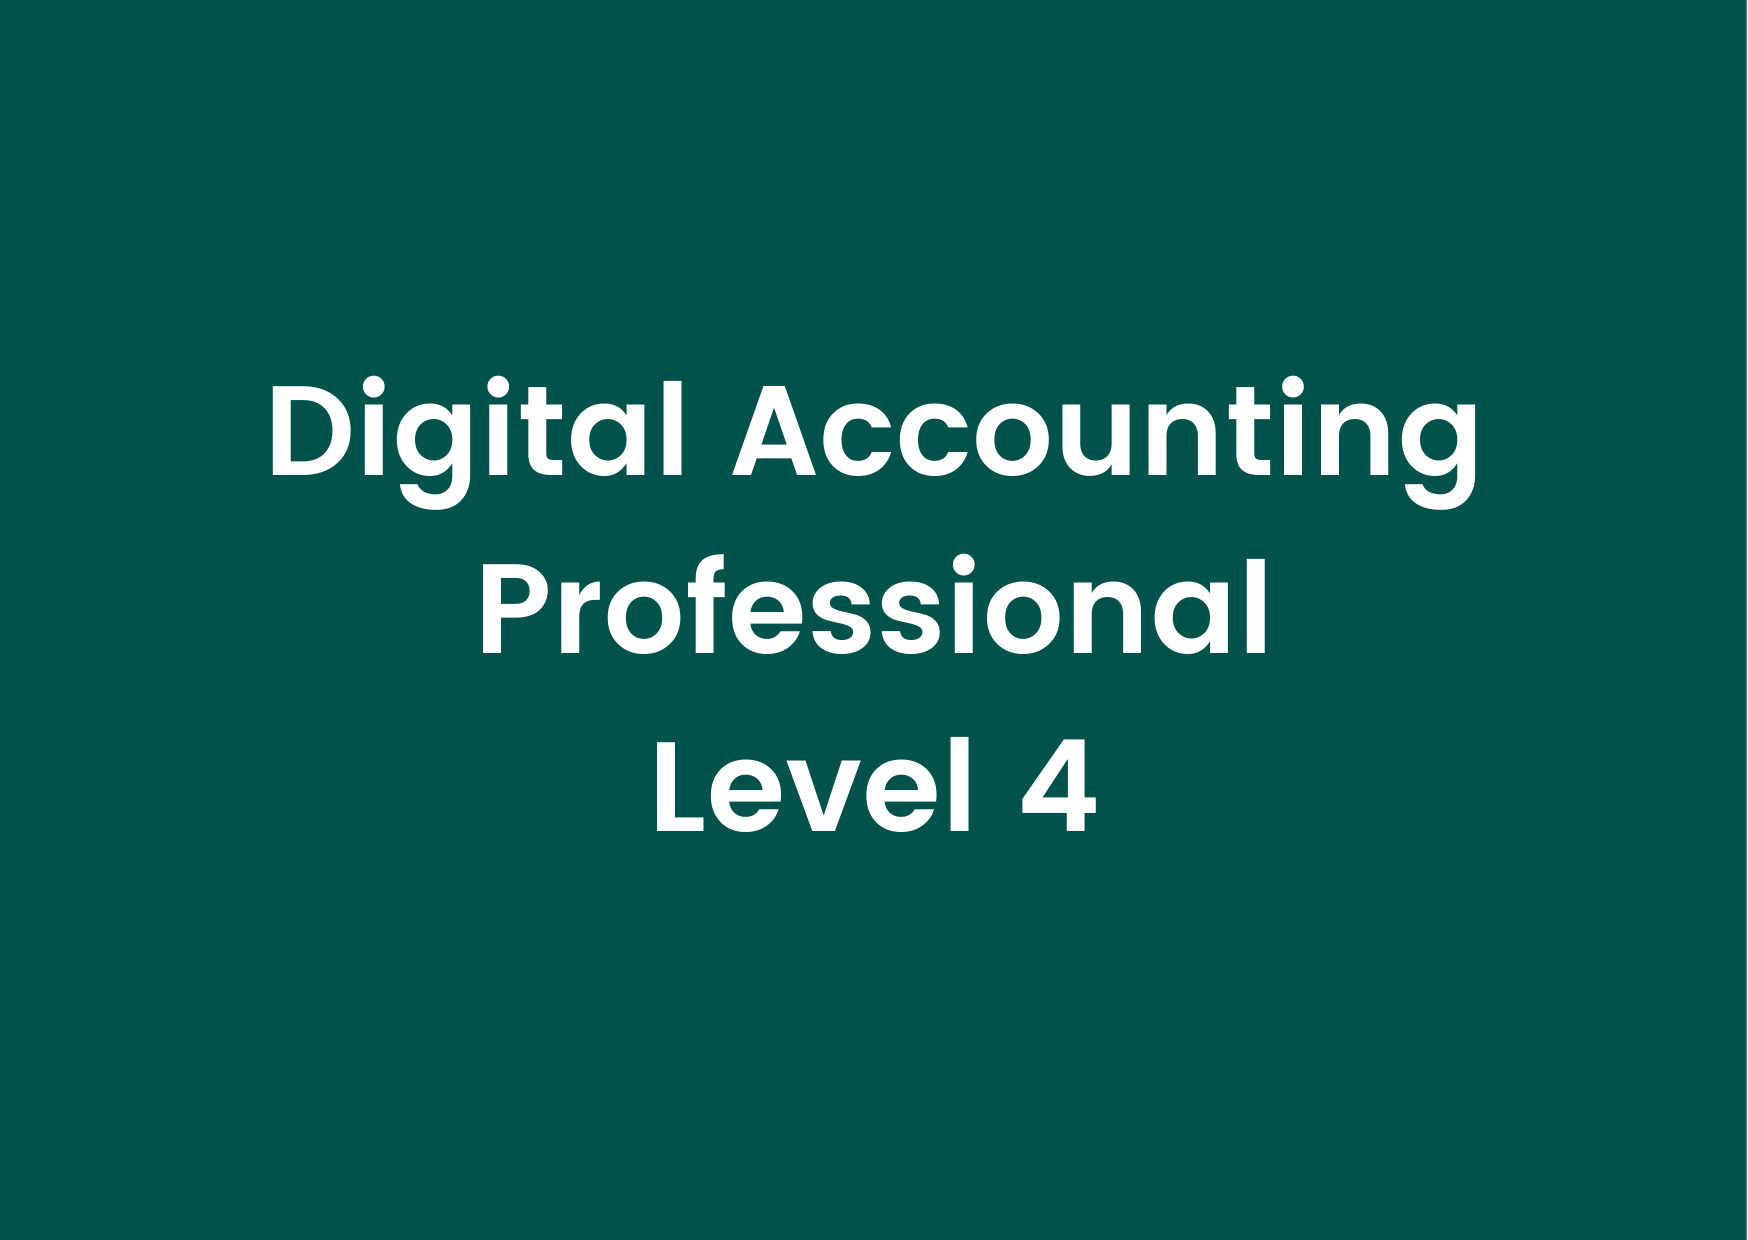 Digital Accounting Professional Level 4